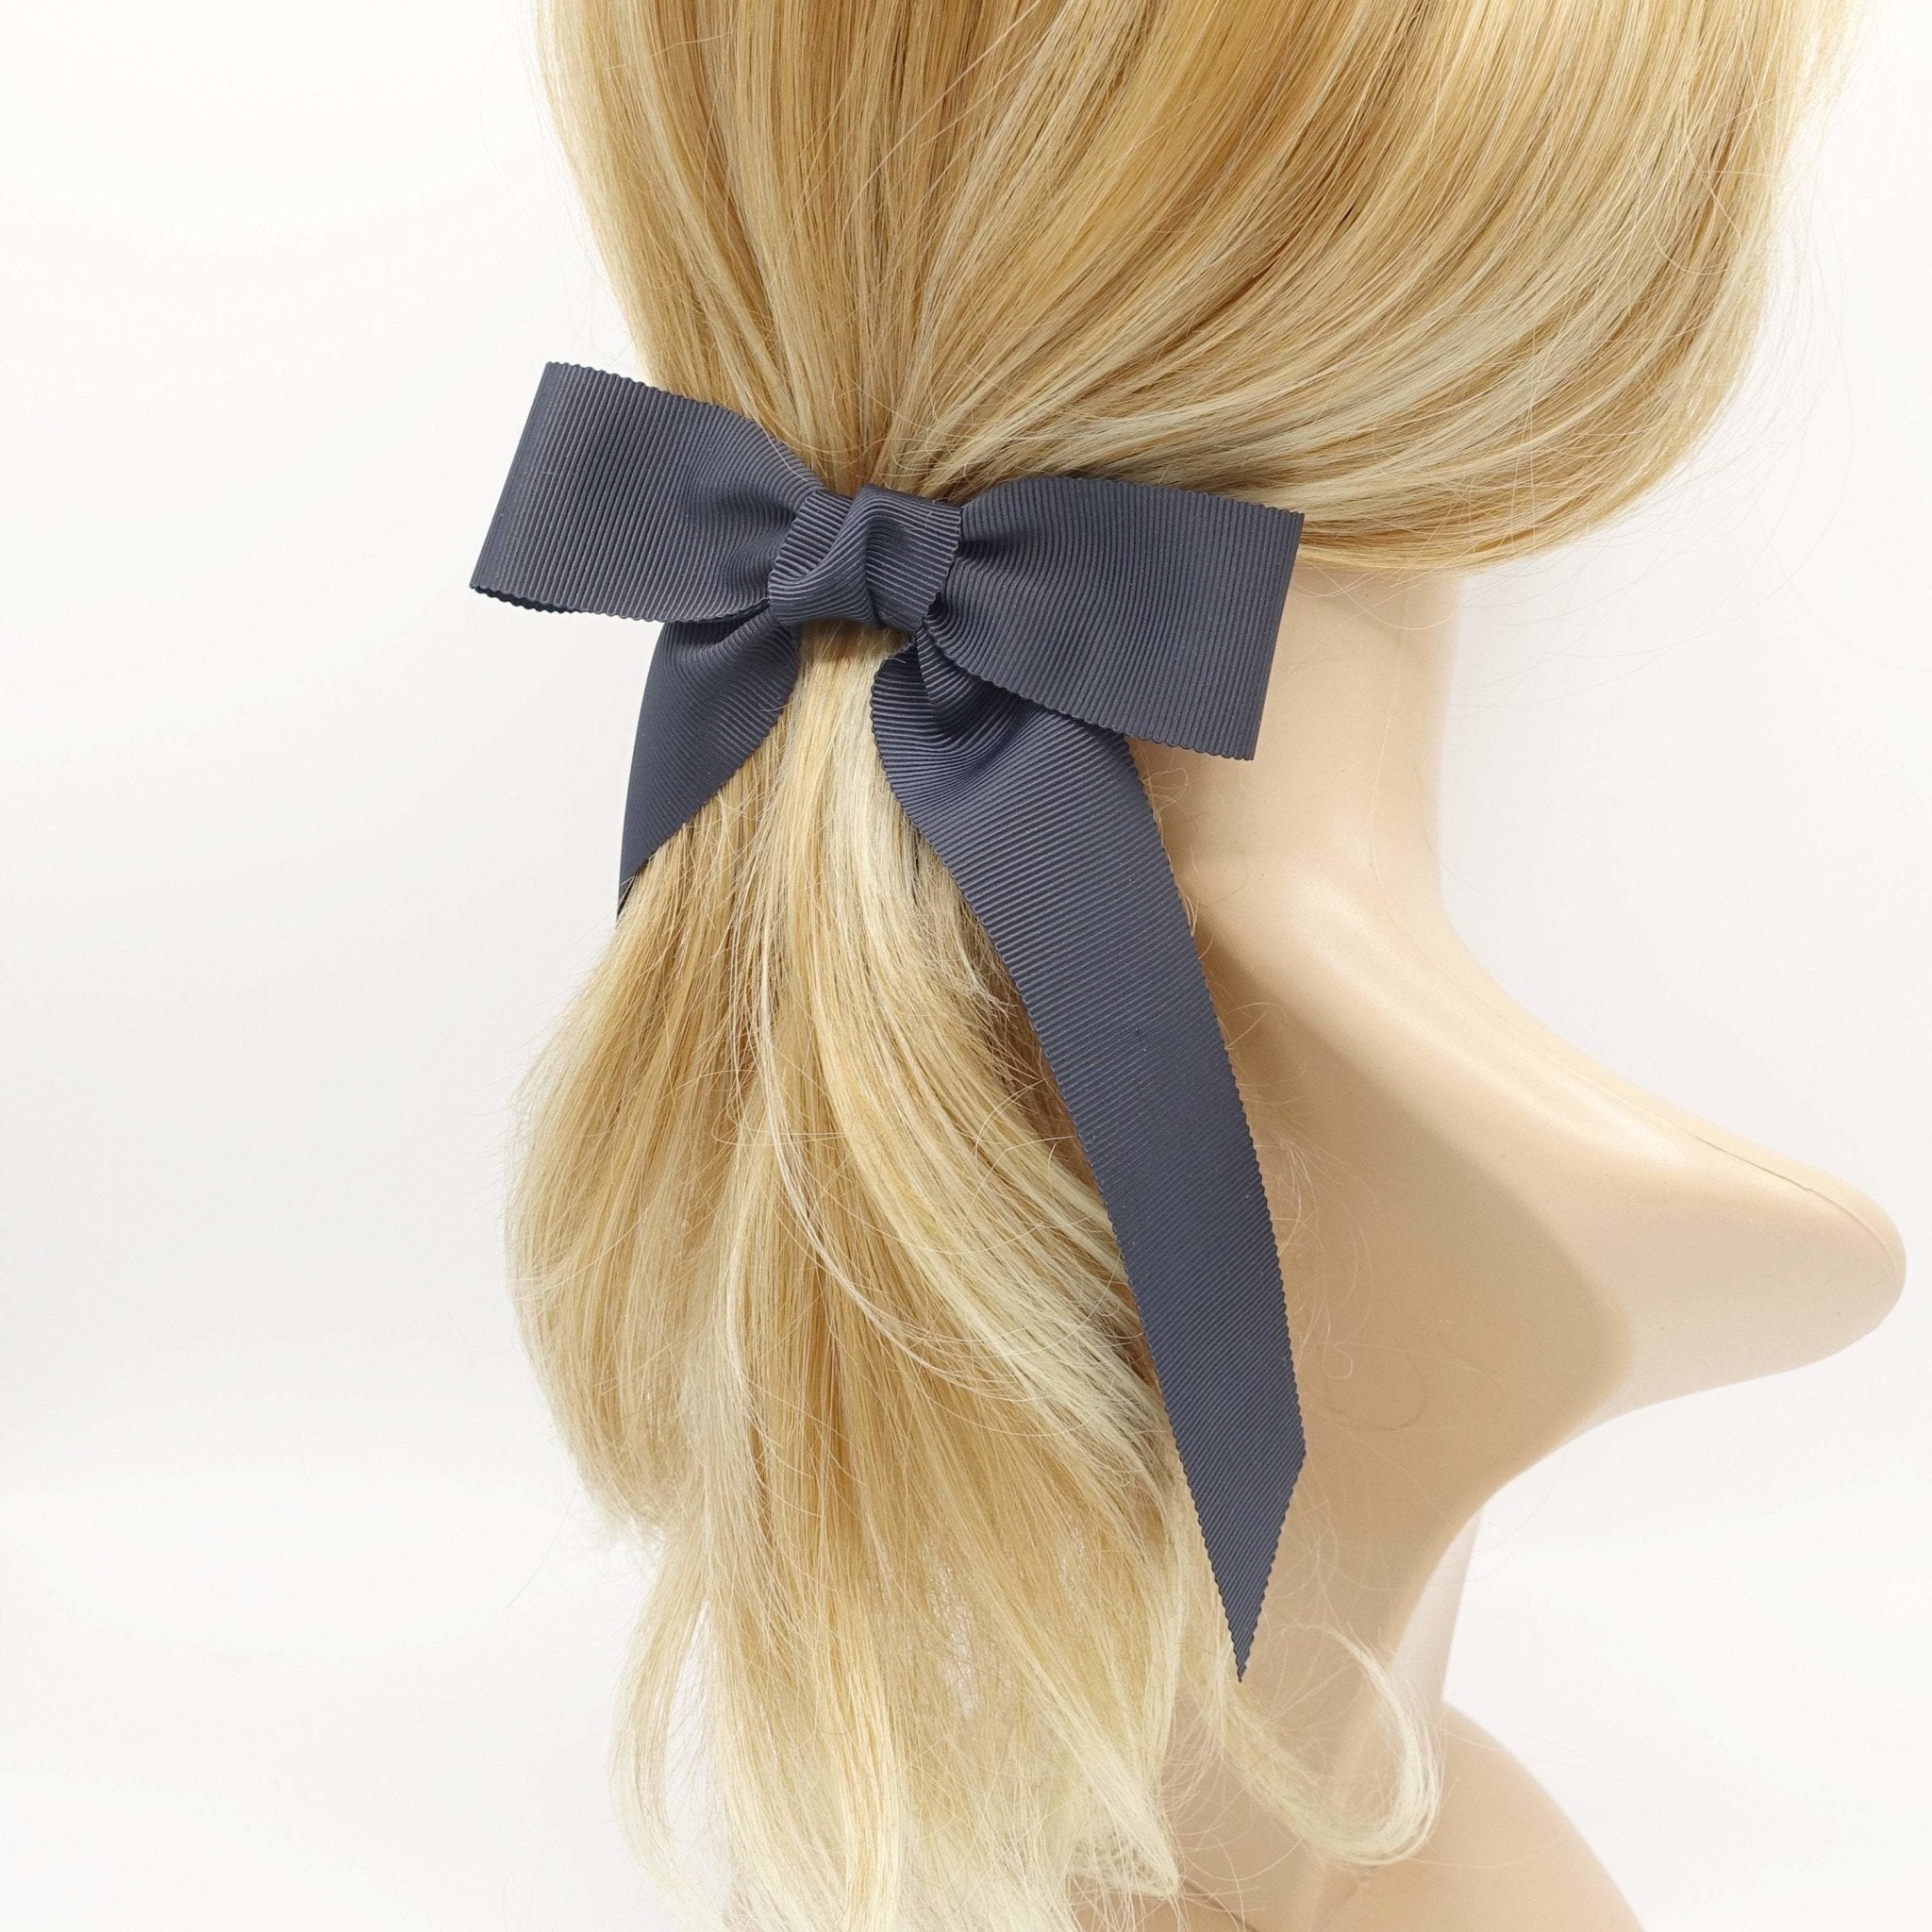 VeryShine claw/banana/barrette Navy grosgrain tail hair bow basic style hair accessory for women